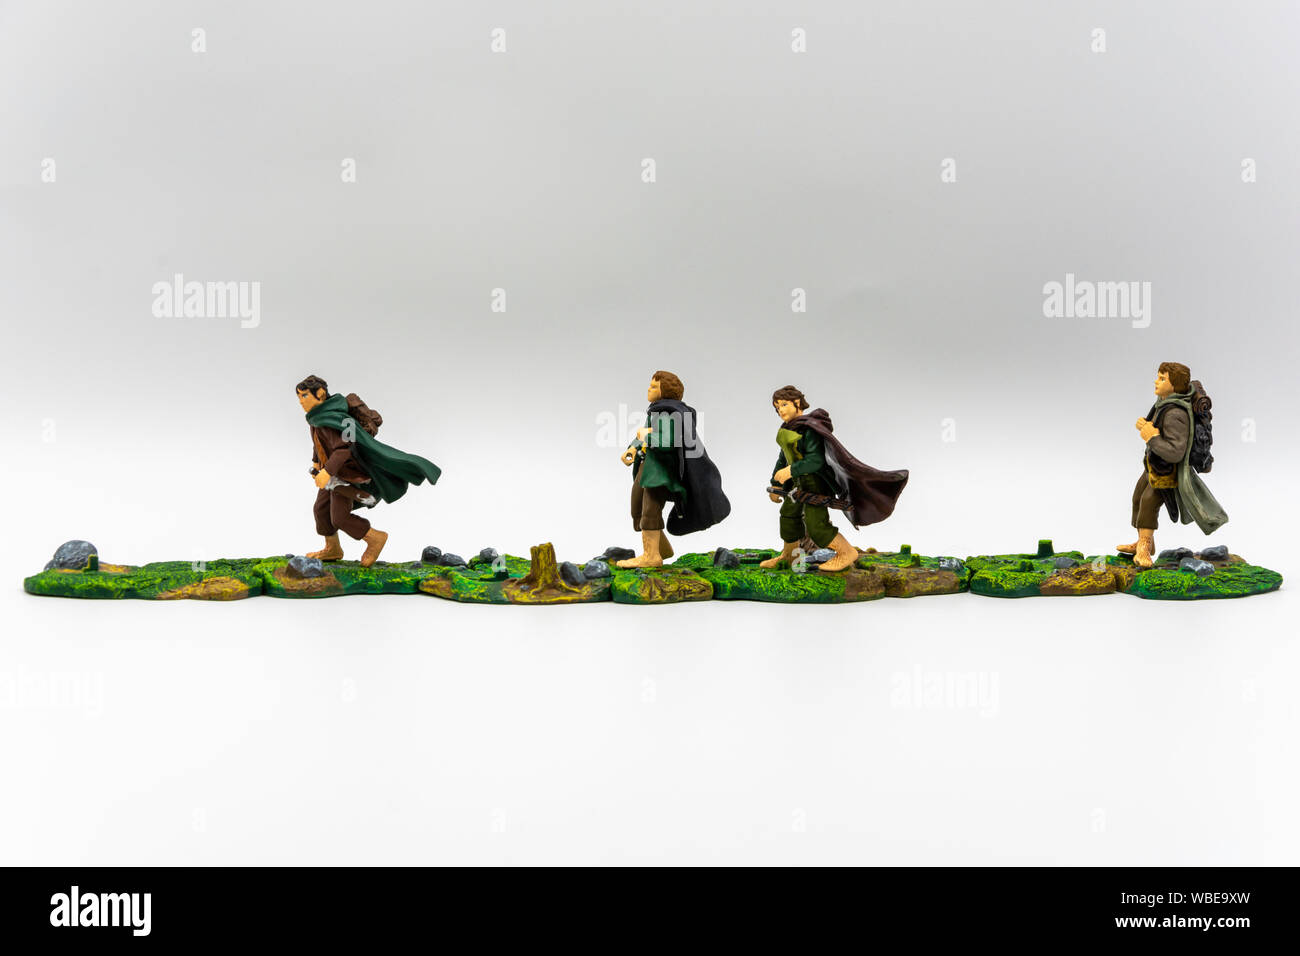 Hobbit Toy: Four Hobbits walk on their journey. Stock Photo